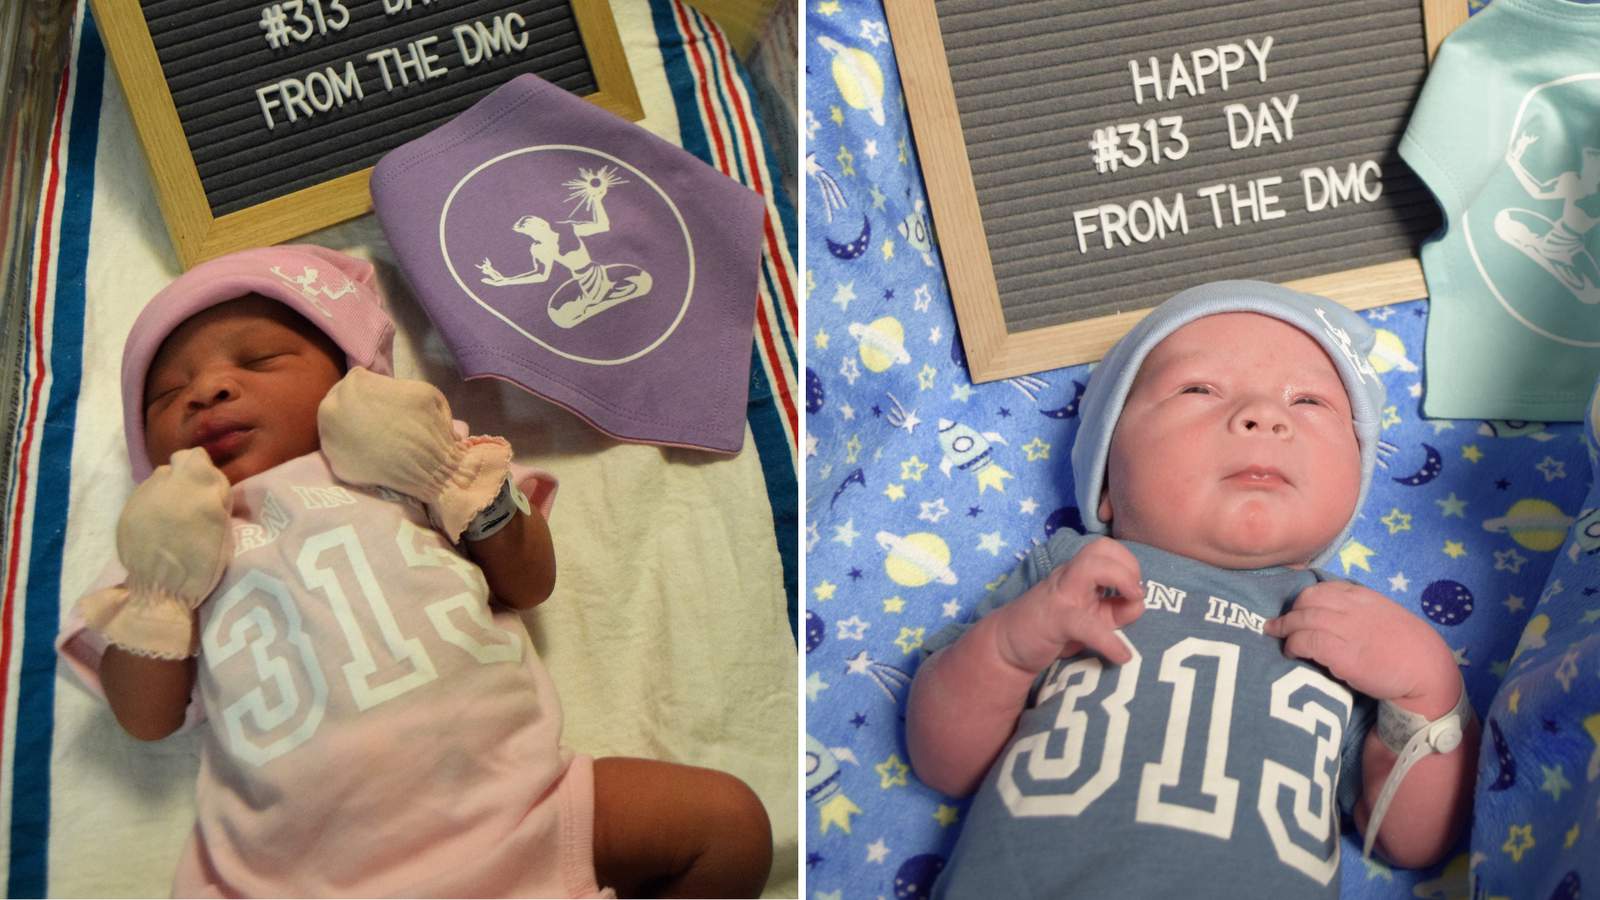 Newborn babies celebrate 313 Day with Detroit apparel at DMC hospital